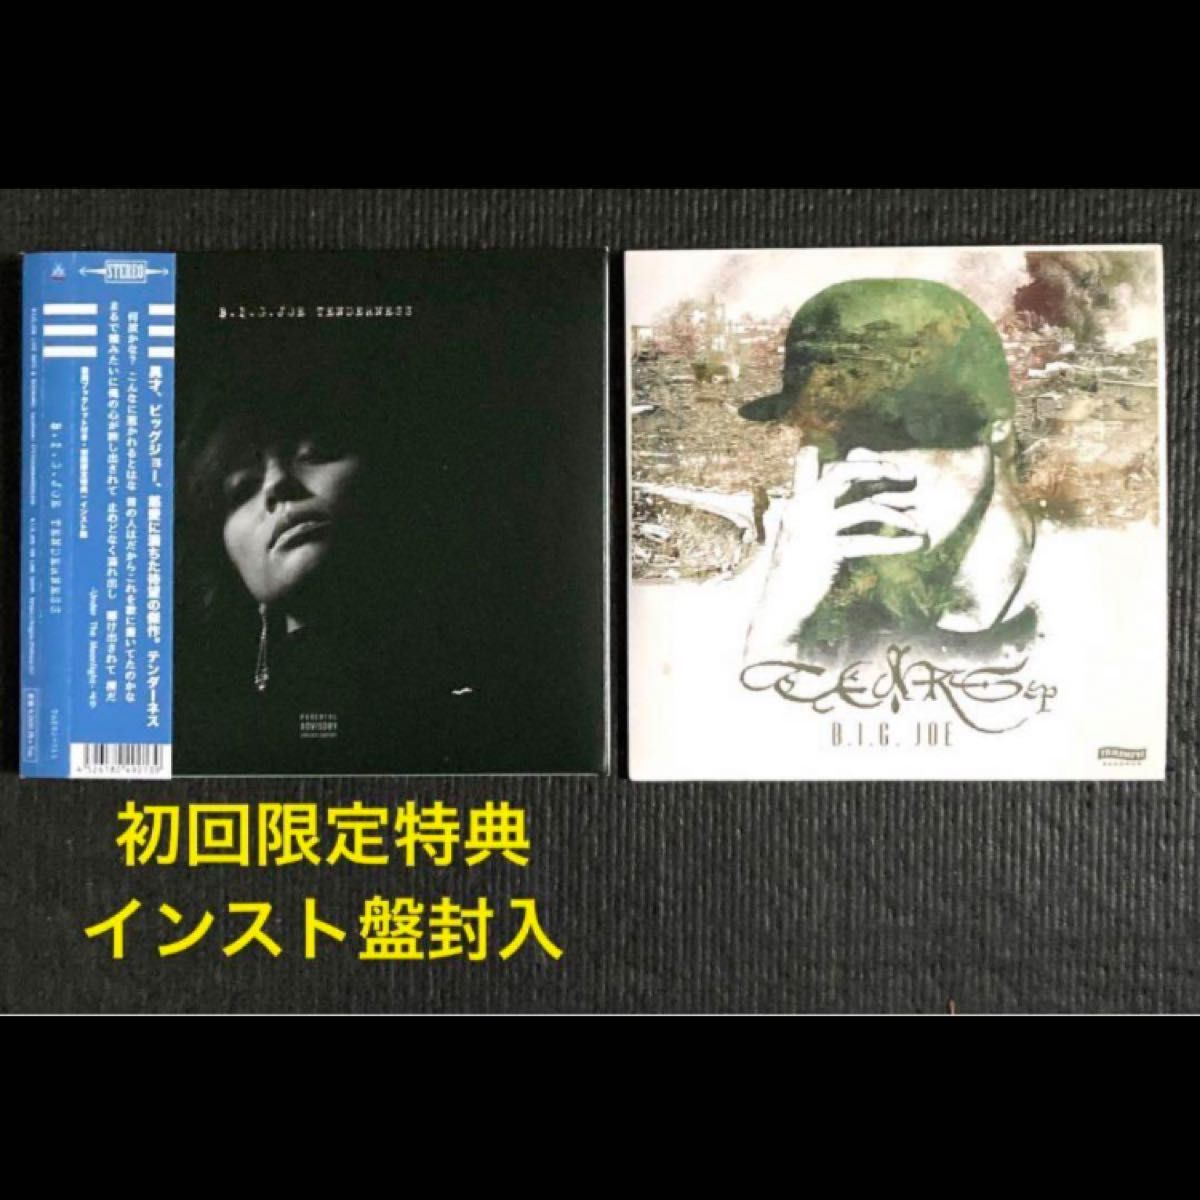 B.I.G.JOE  CD2枚セット (TENDERNESS初回盤※インスト CD付、TEARS ep) 廃盤